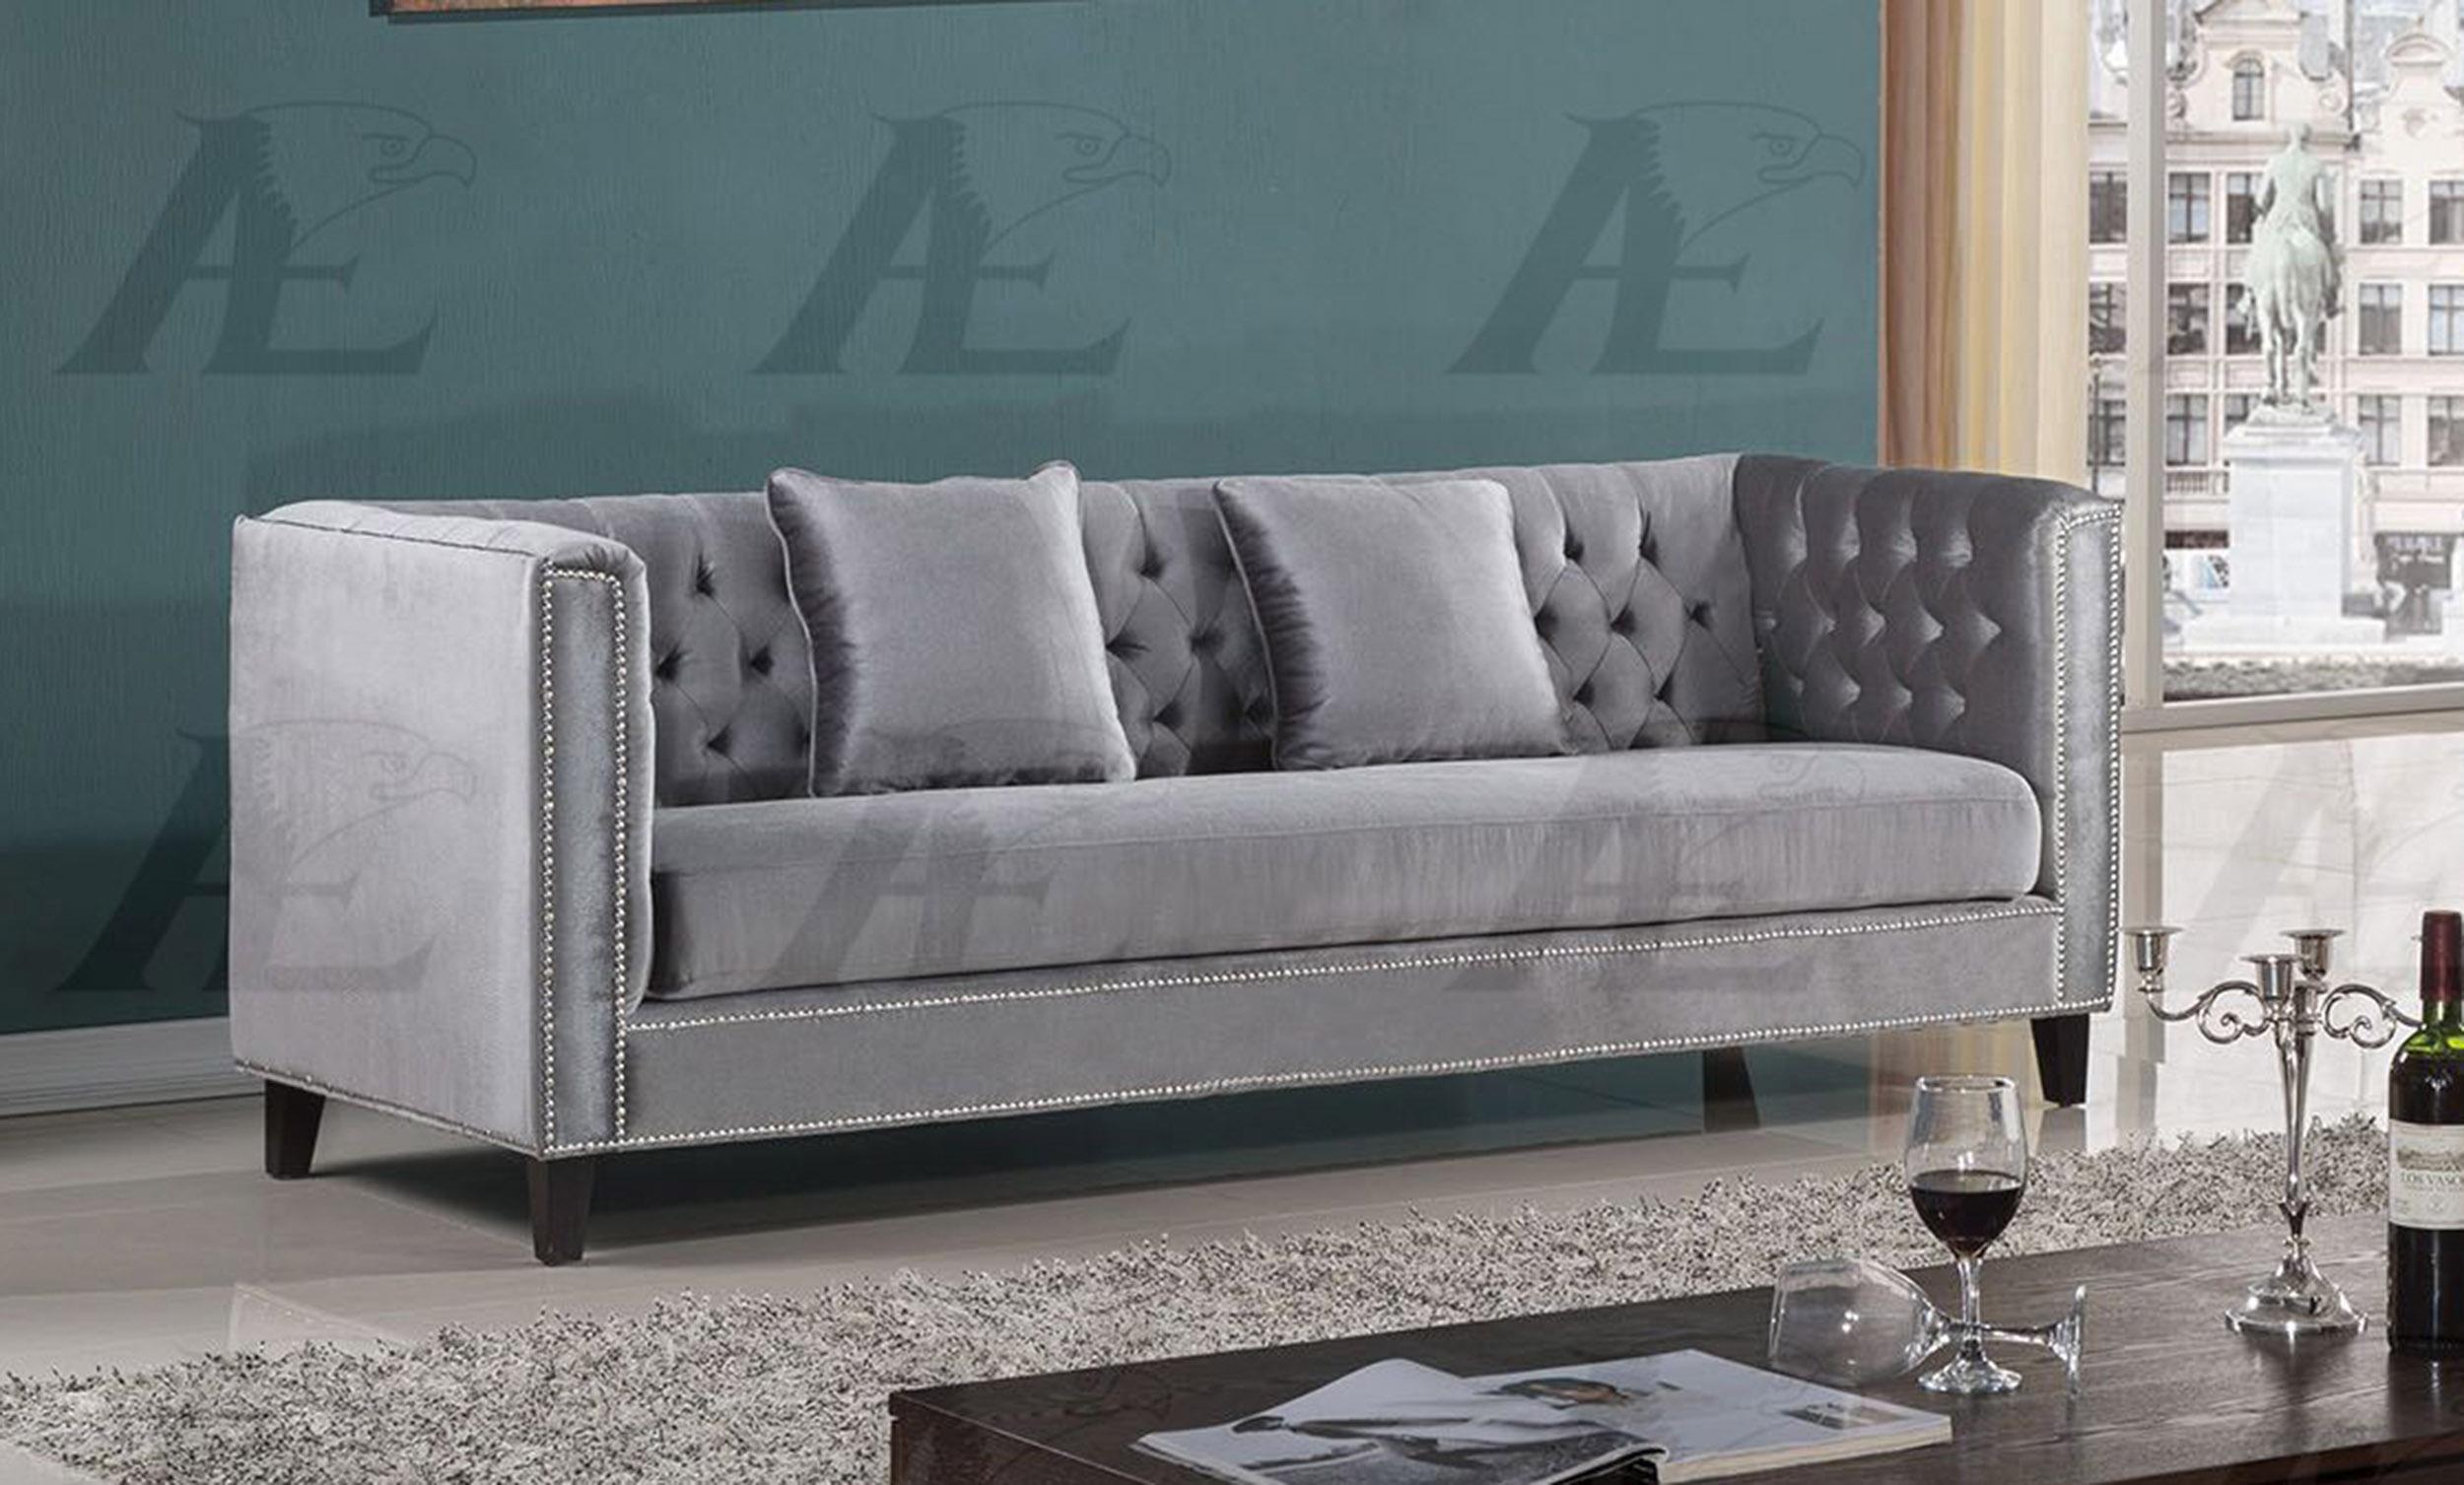 Contemporary Sofa AE2373-GR AE2373-GR in Gray Fabric